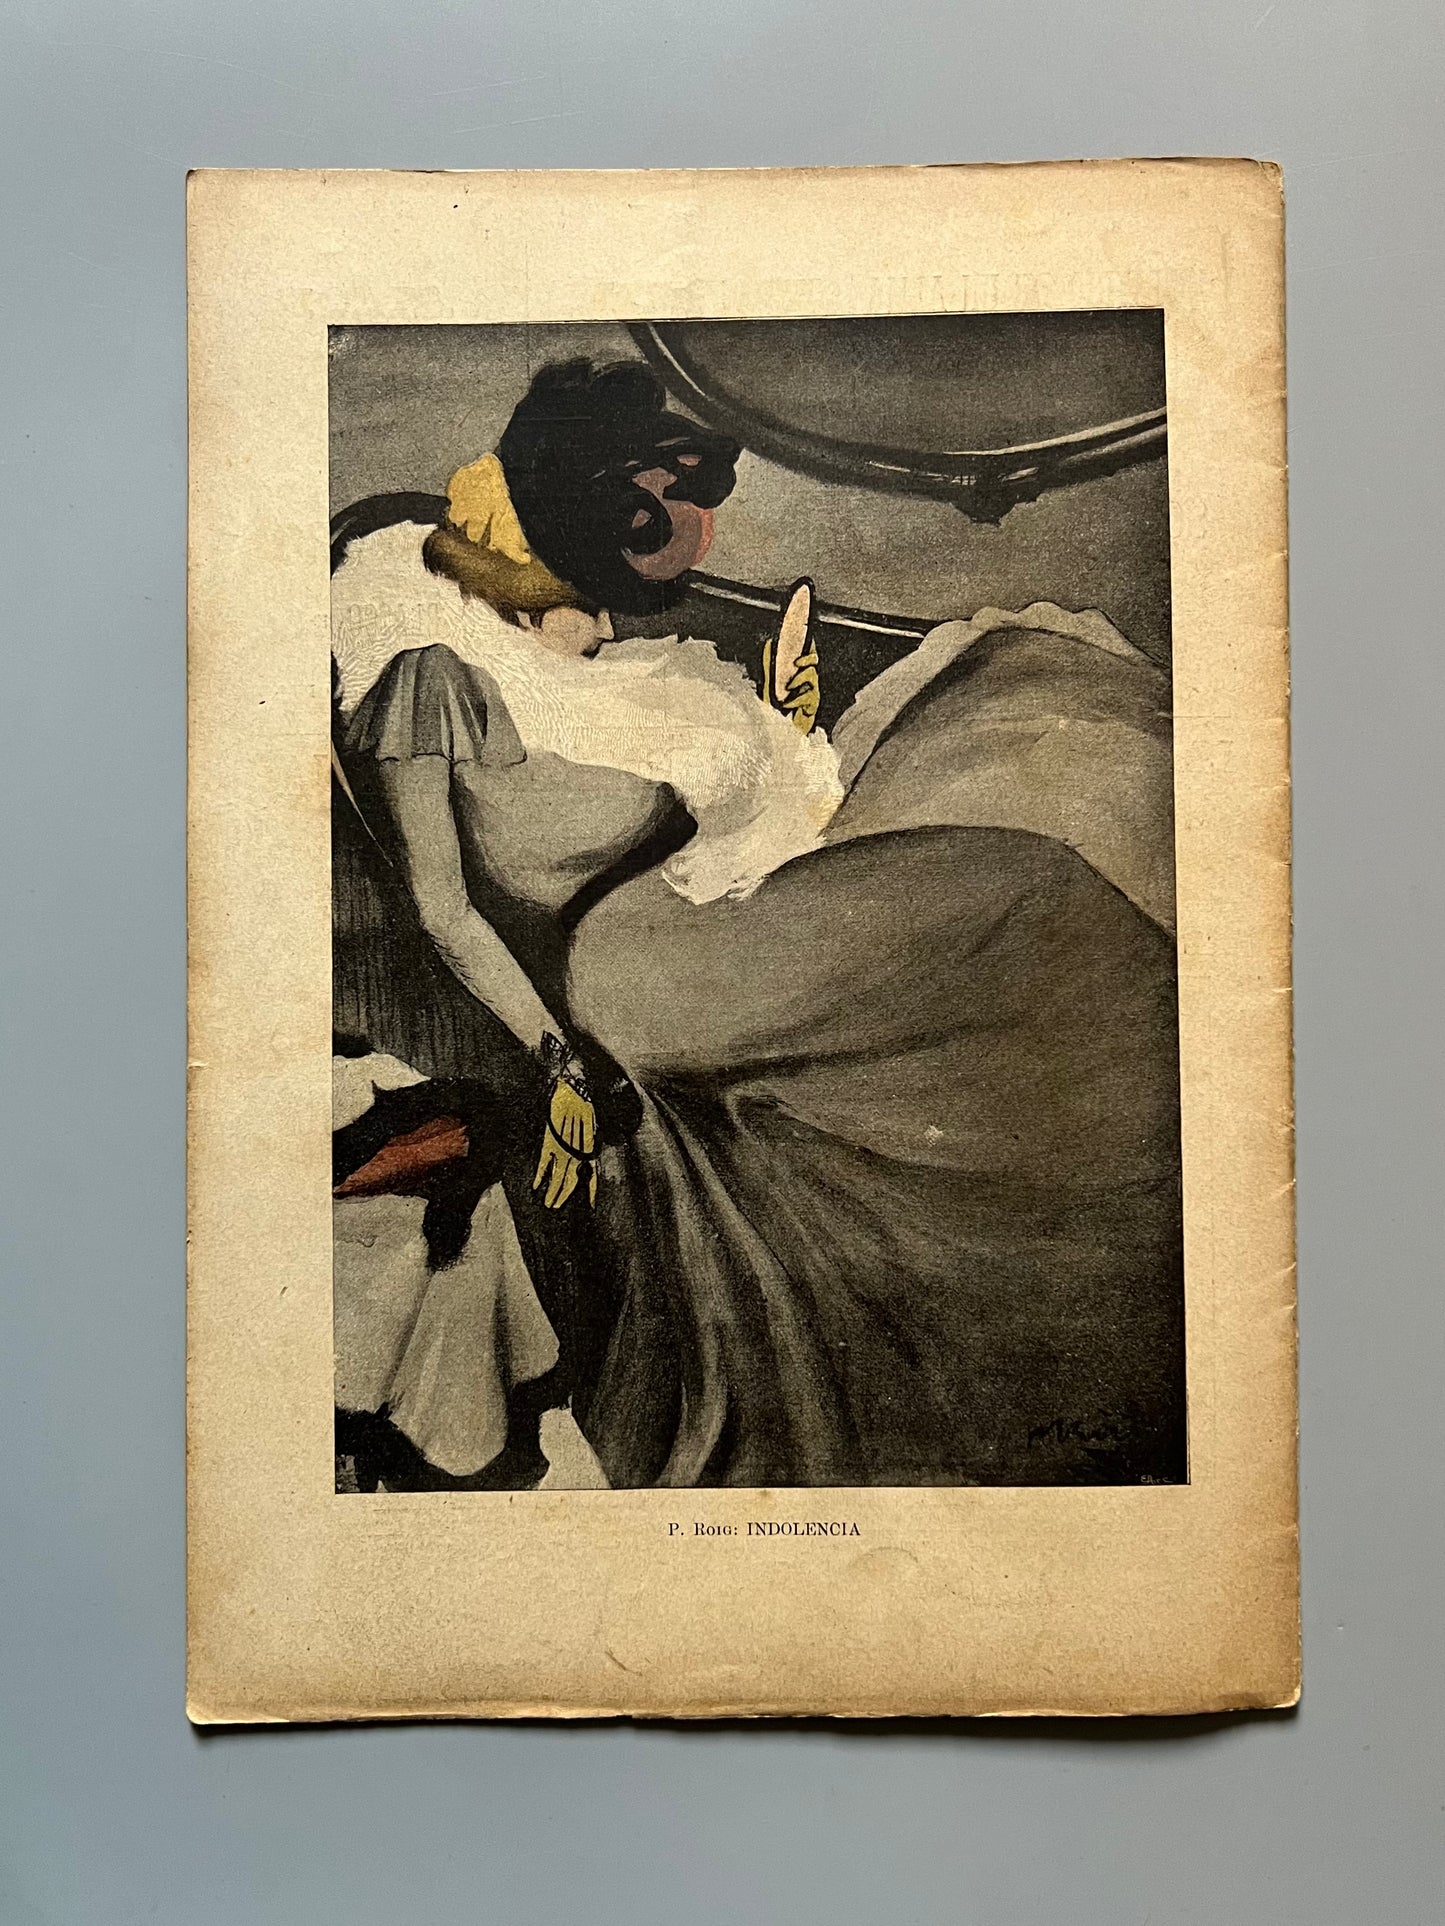 Iris, revista semanal ilustrada nº6 - Barcelona, 17 junio 1899